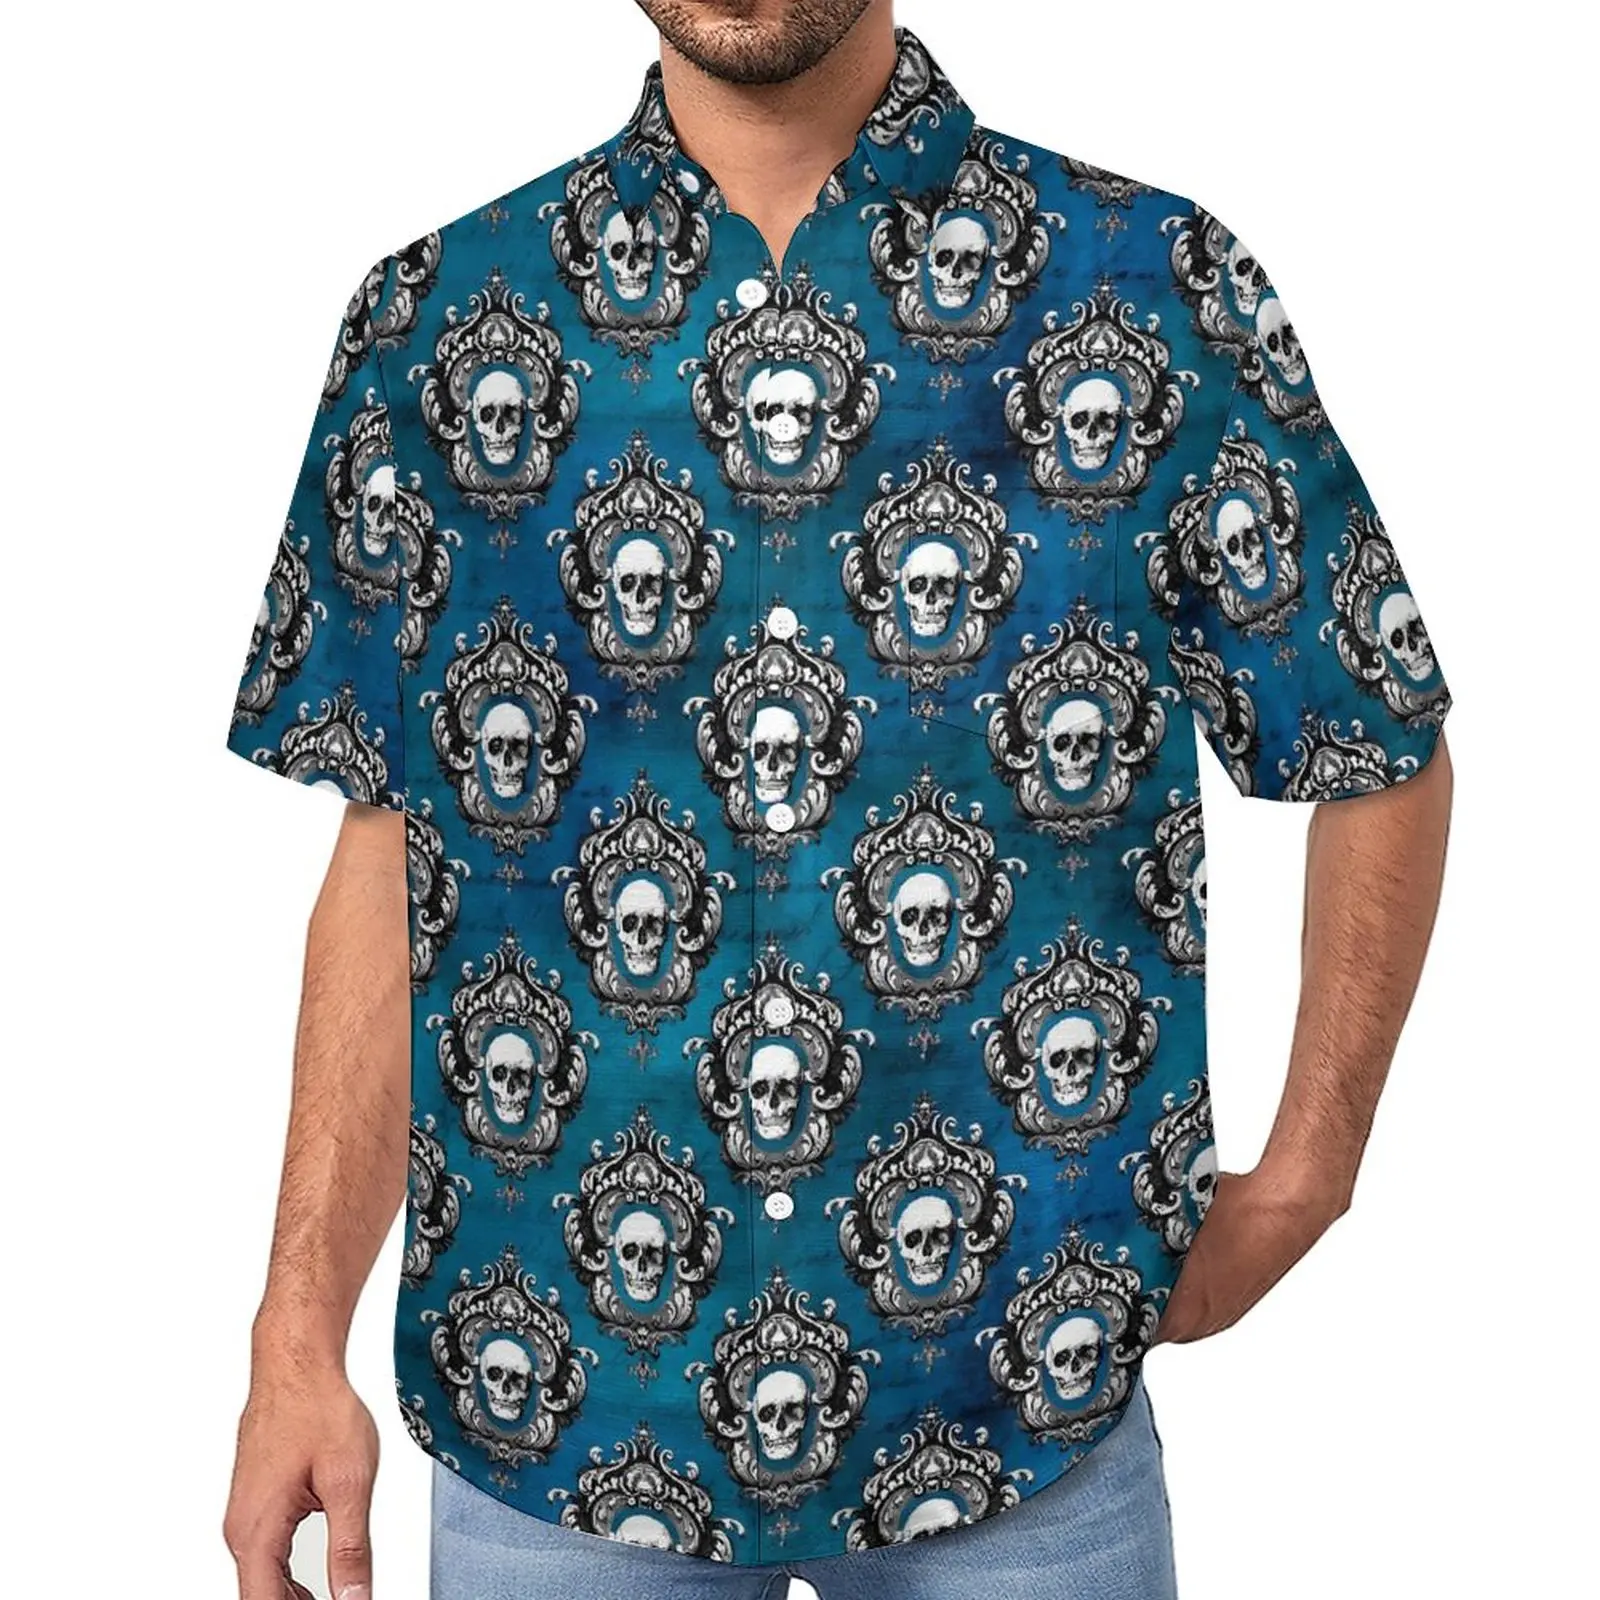 

Skeleton Print Blouses Male Gothic Skull Casual Shirts Summer Short-Sleeve Custom Trendy Oversize Vacation Shirt Gift Idea